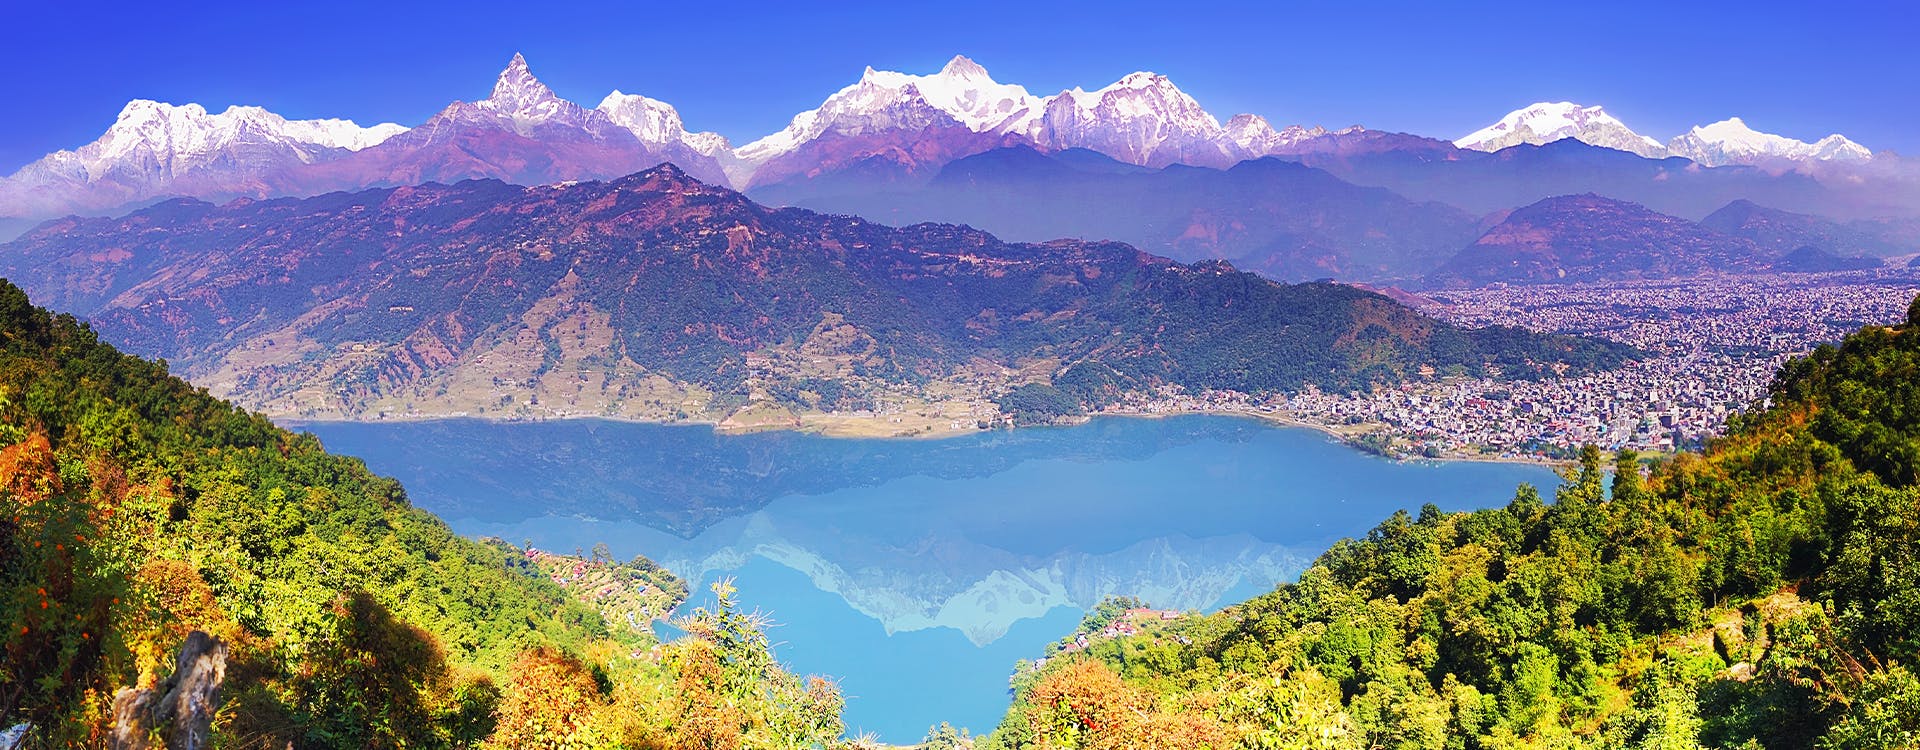 Reflection of Annapurna Range on Phewa Lake